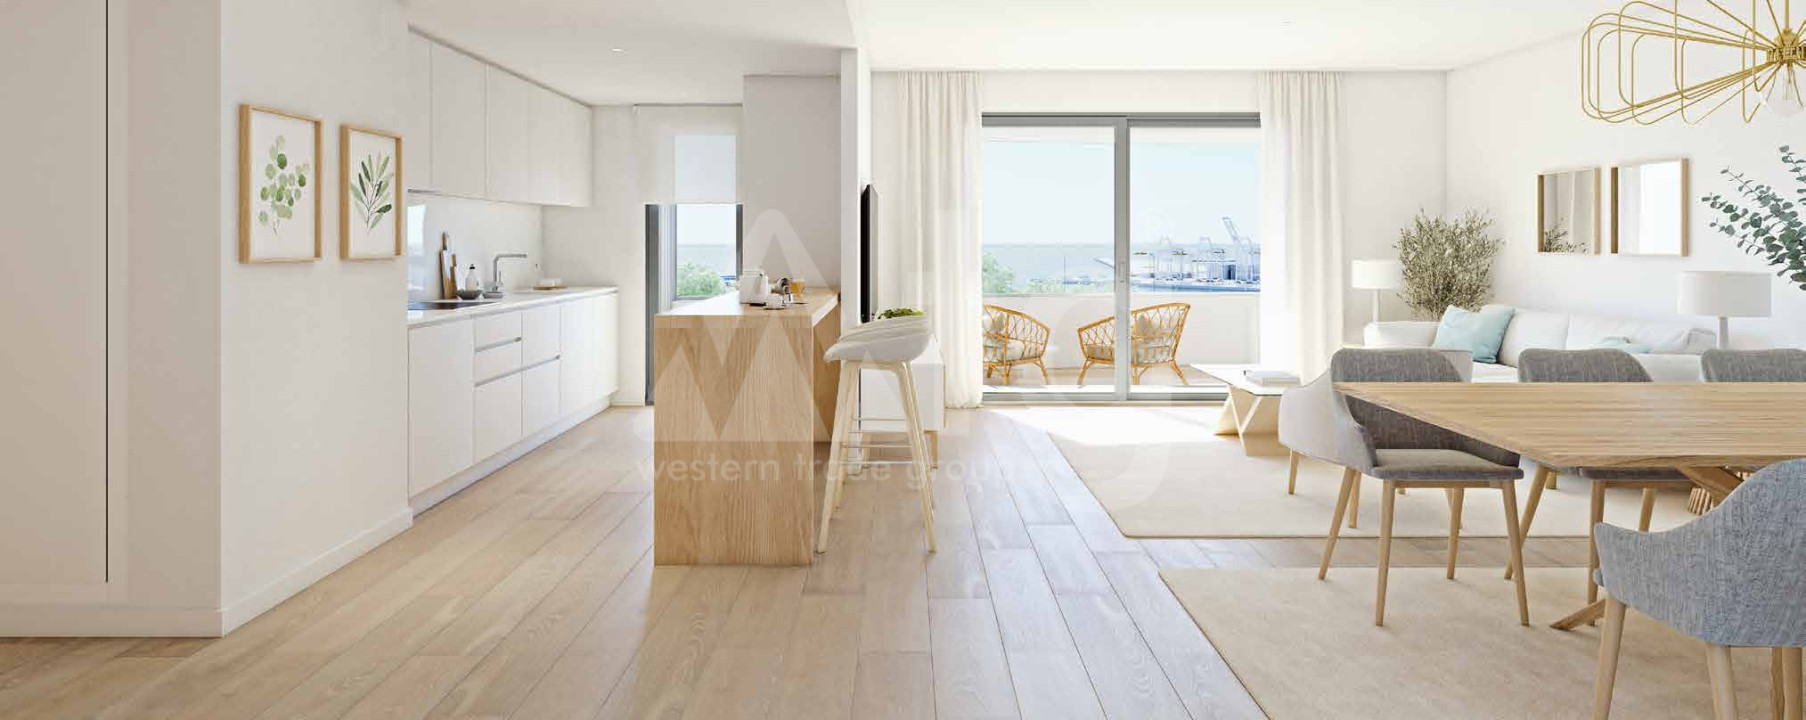 3 bedroom Apartment in Alicante - AEH25889 - 3